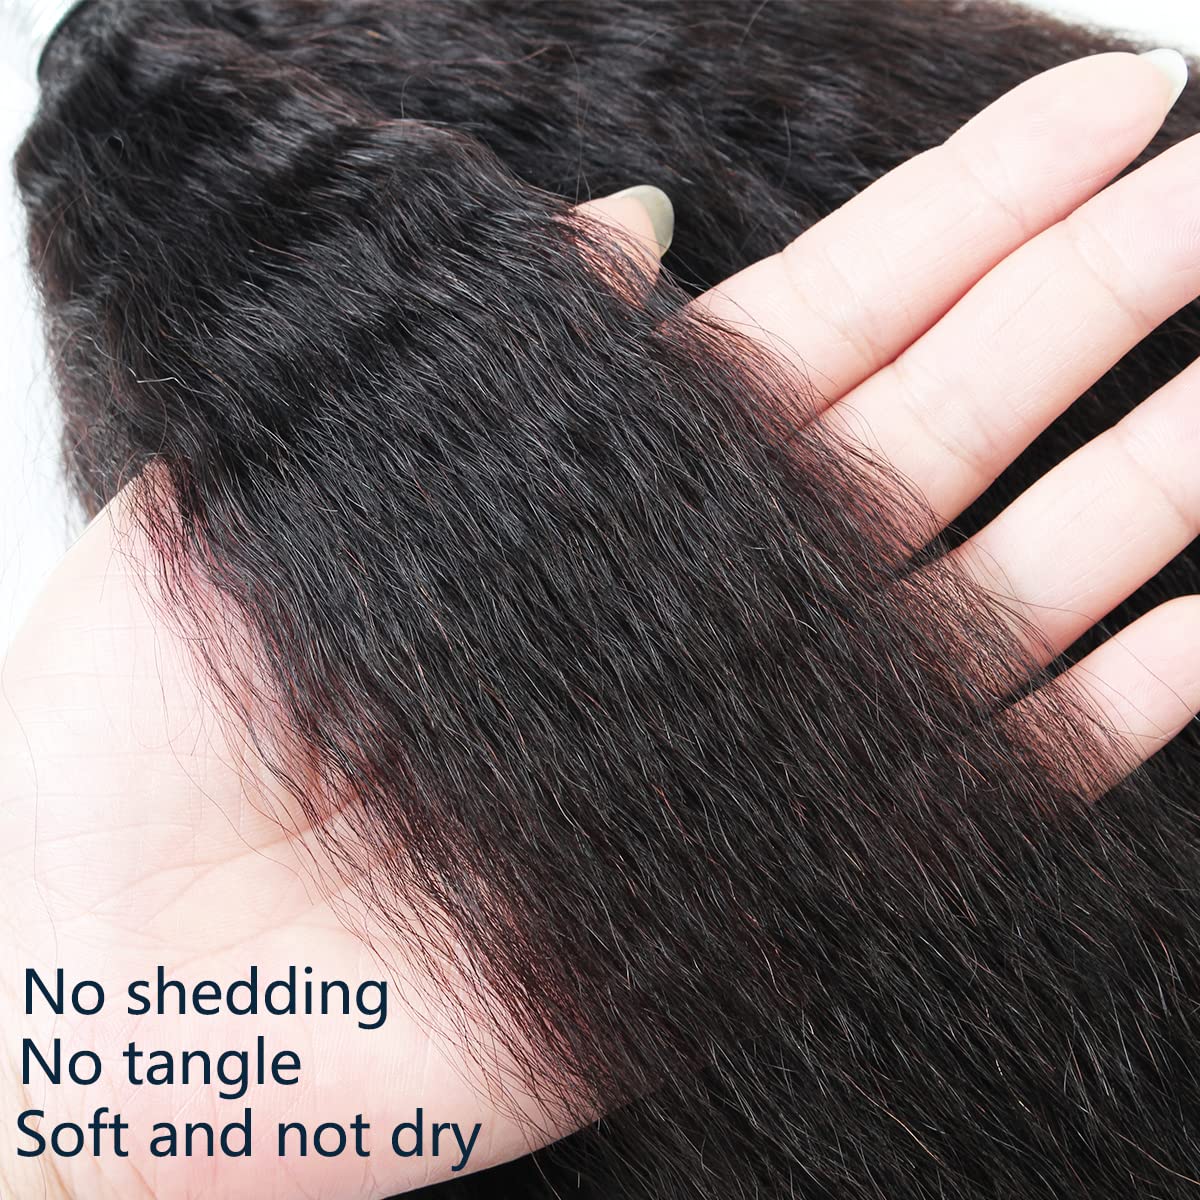 Tissage Cheveux Vierge Human Hair Yaki Straight 7A Brun Foncé 1B 100 Gr